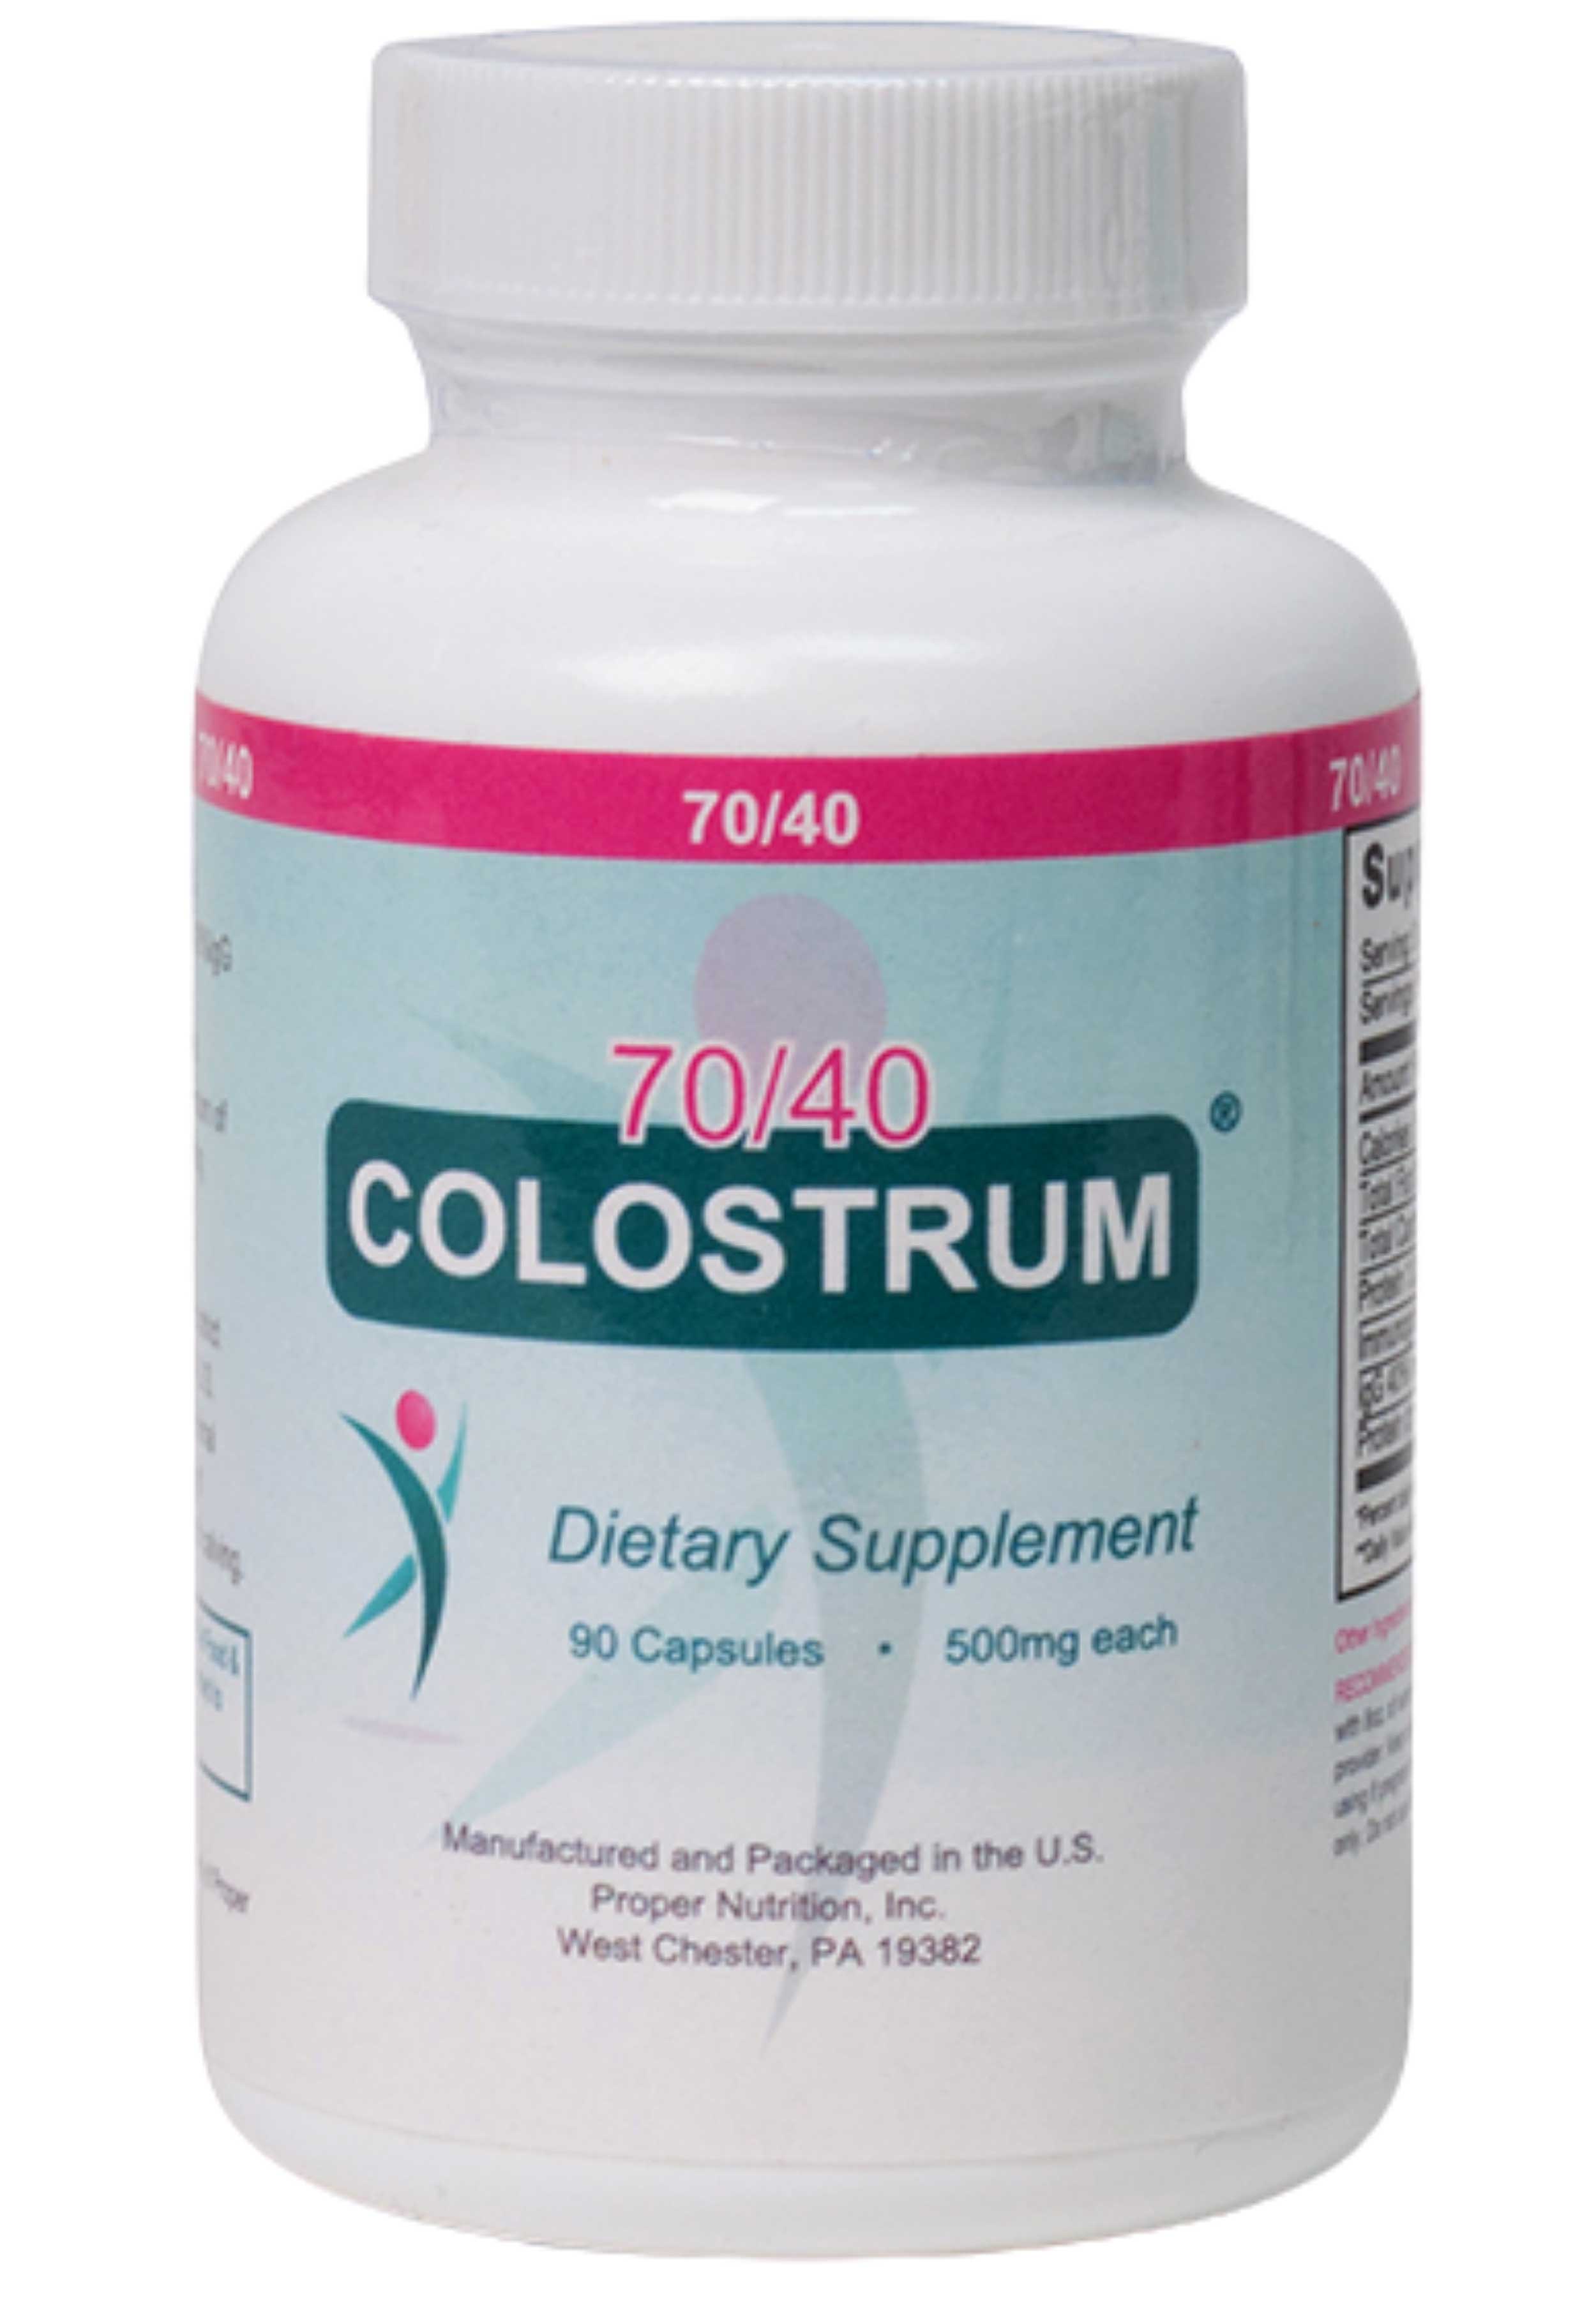 Proper Nutrition Colostrum 70/40